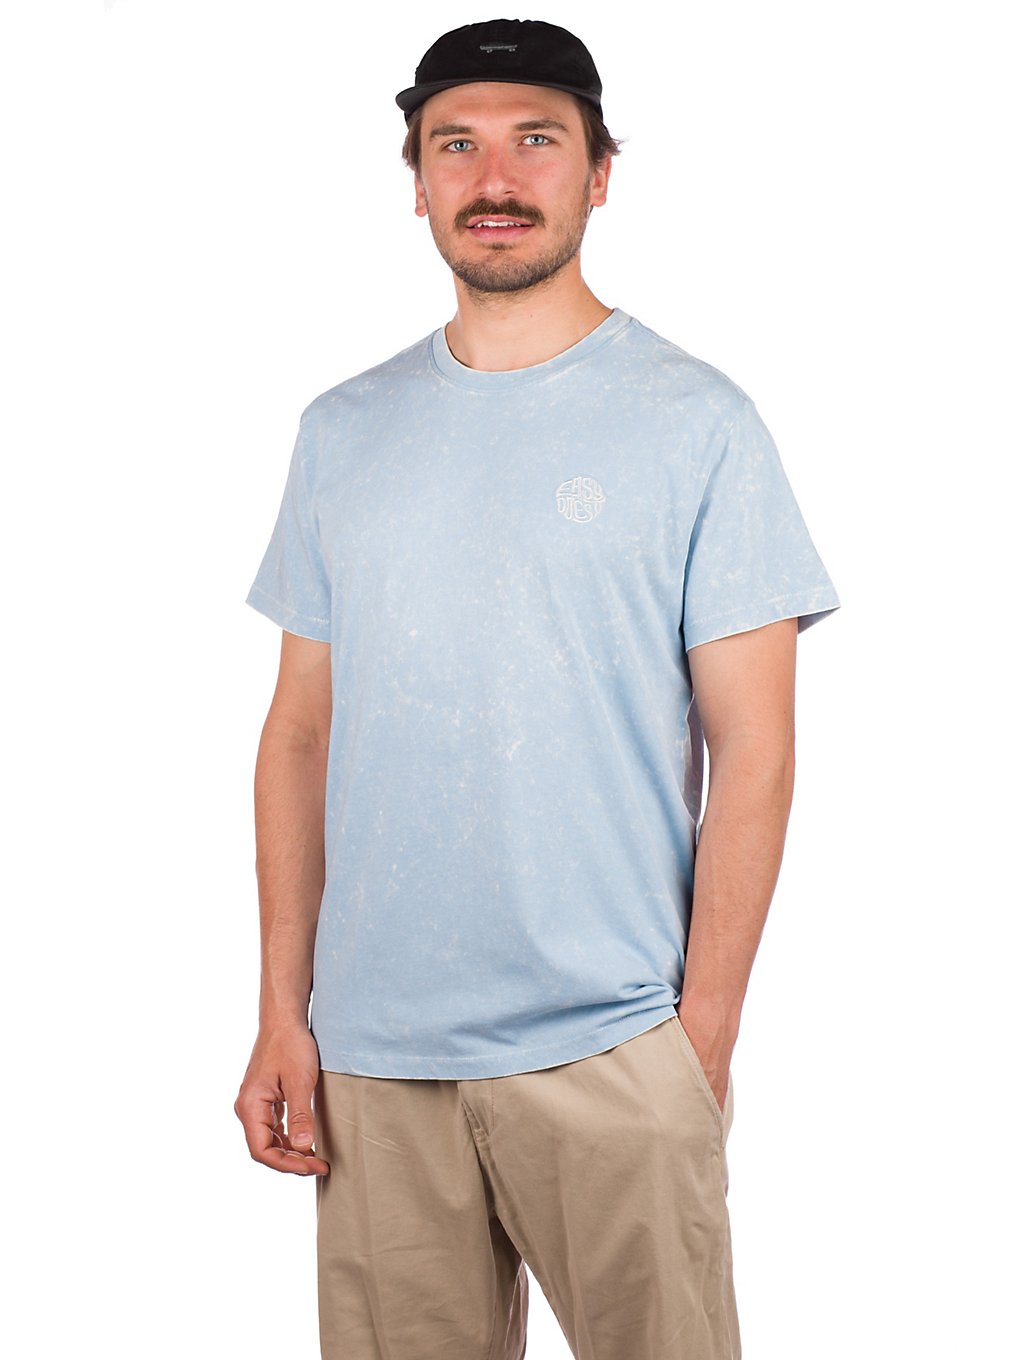 Katin USA Easy Emblem Emb T-Shirt tiedye